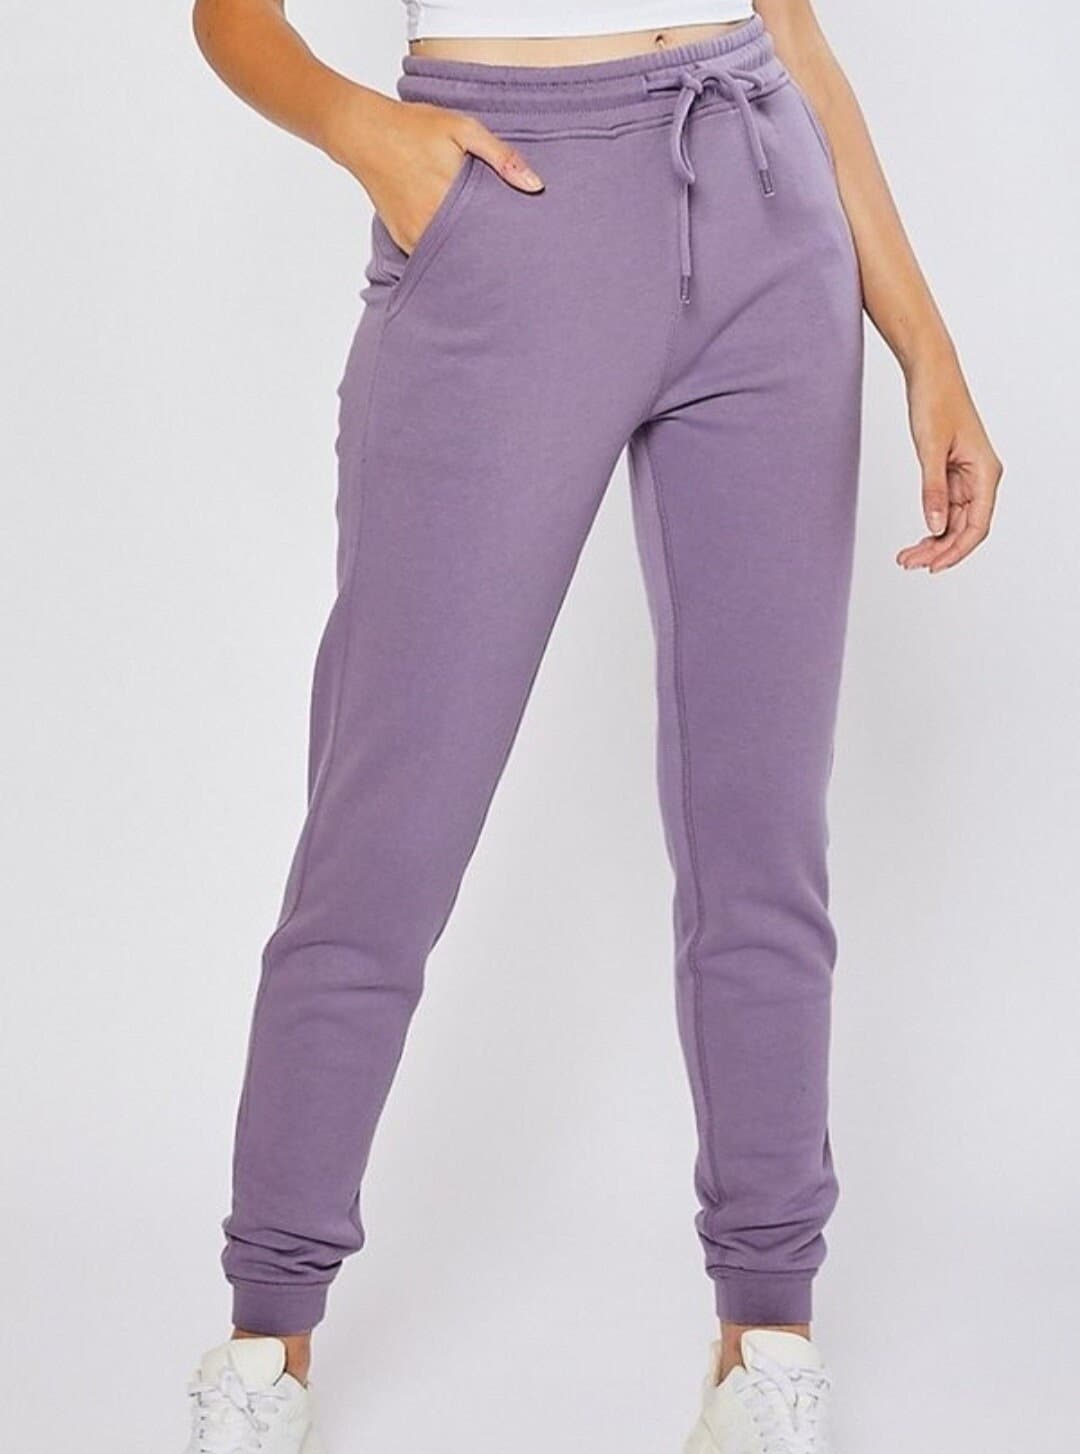 Women's Crossover Waist Leggings W Pockets, 2XS-6XL Plus, Yoga Leggings,  Purple, Lavender, Solid Print, Biker Pants,gym Pants, Yoga Pants 